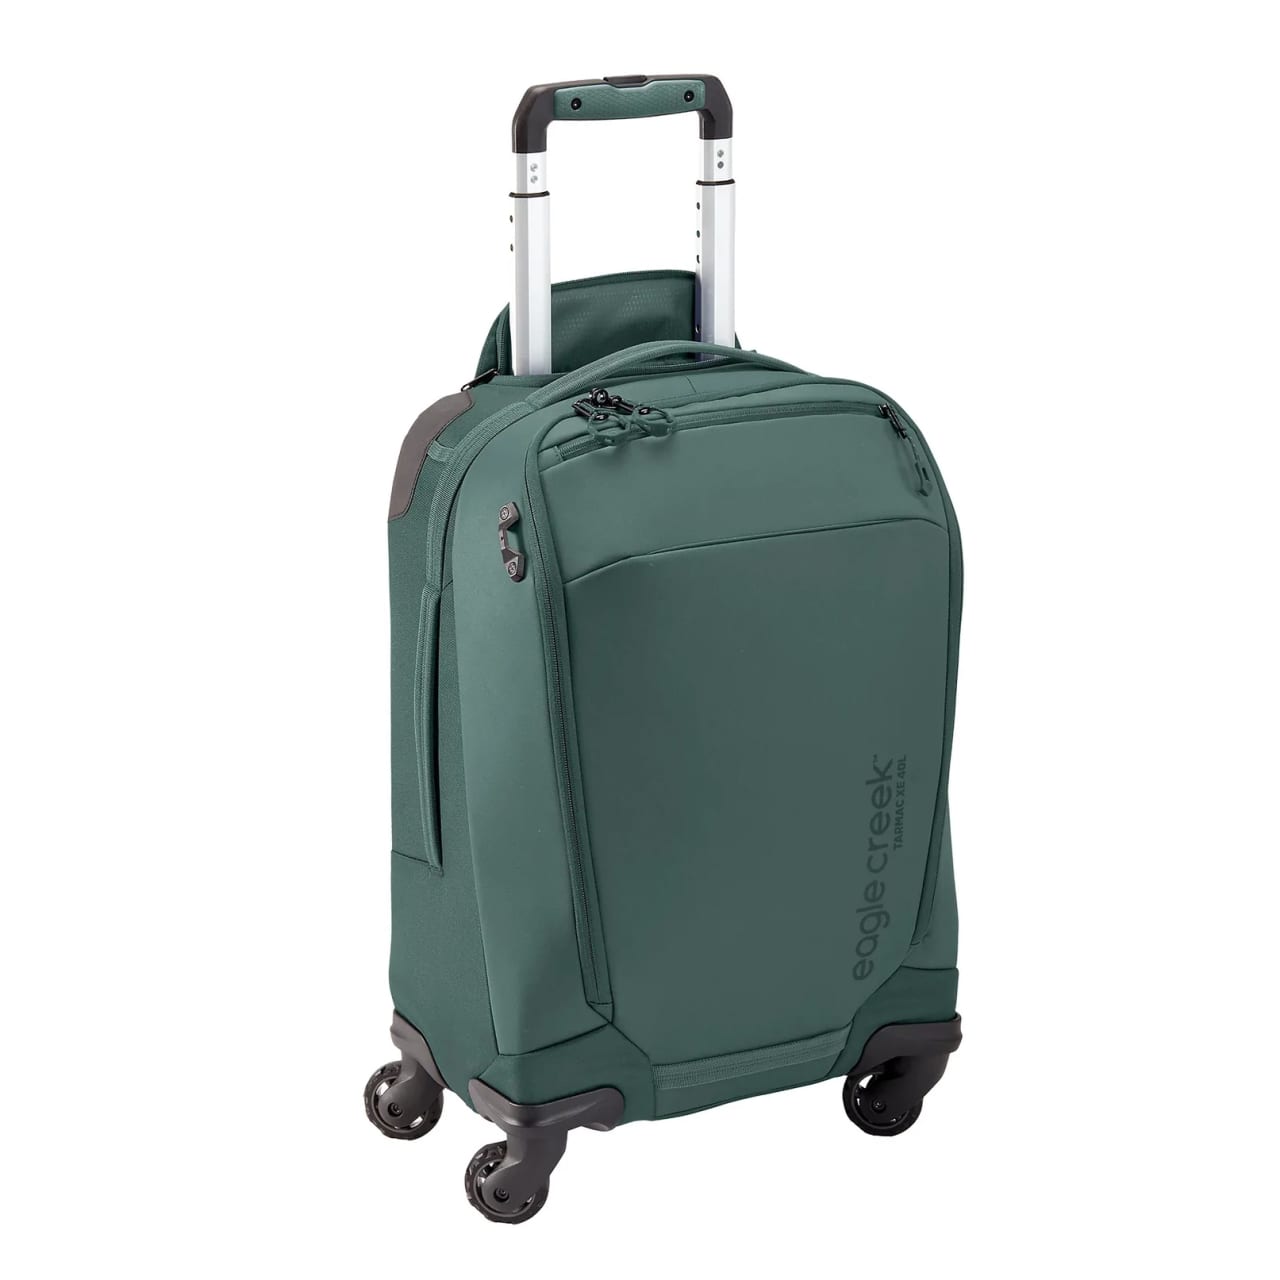 Tarmac XE 4-Wheel Carry On Luggage